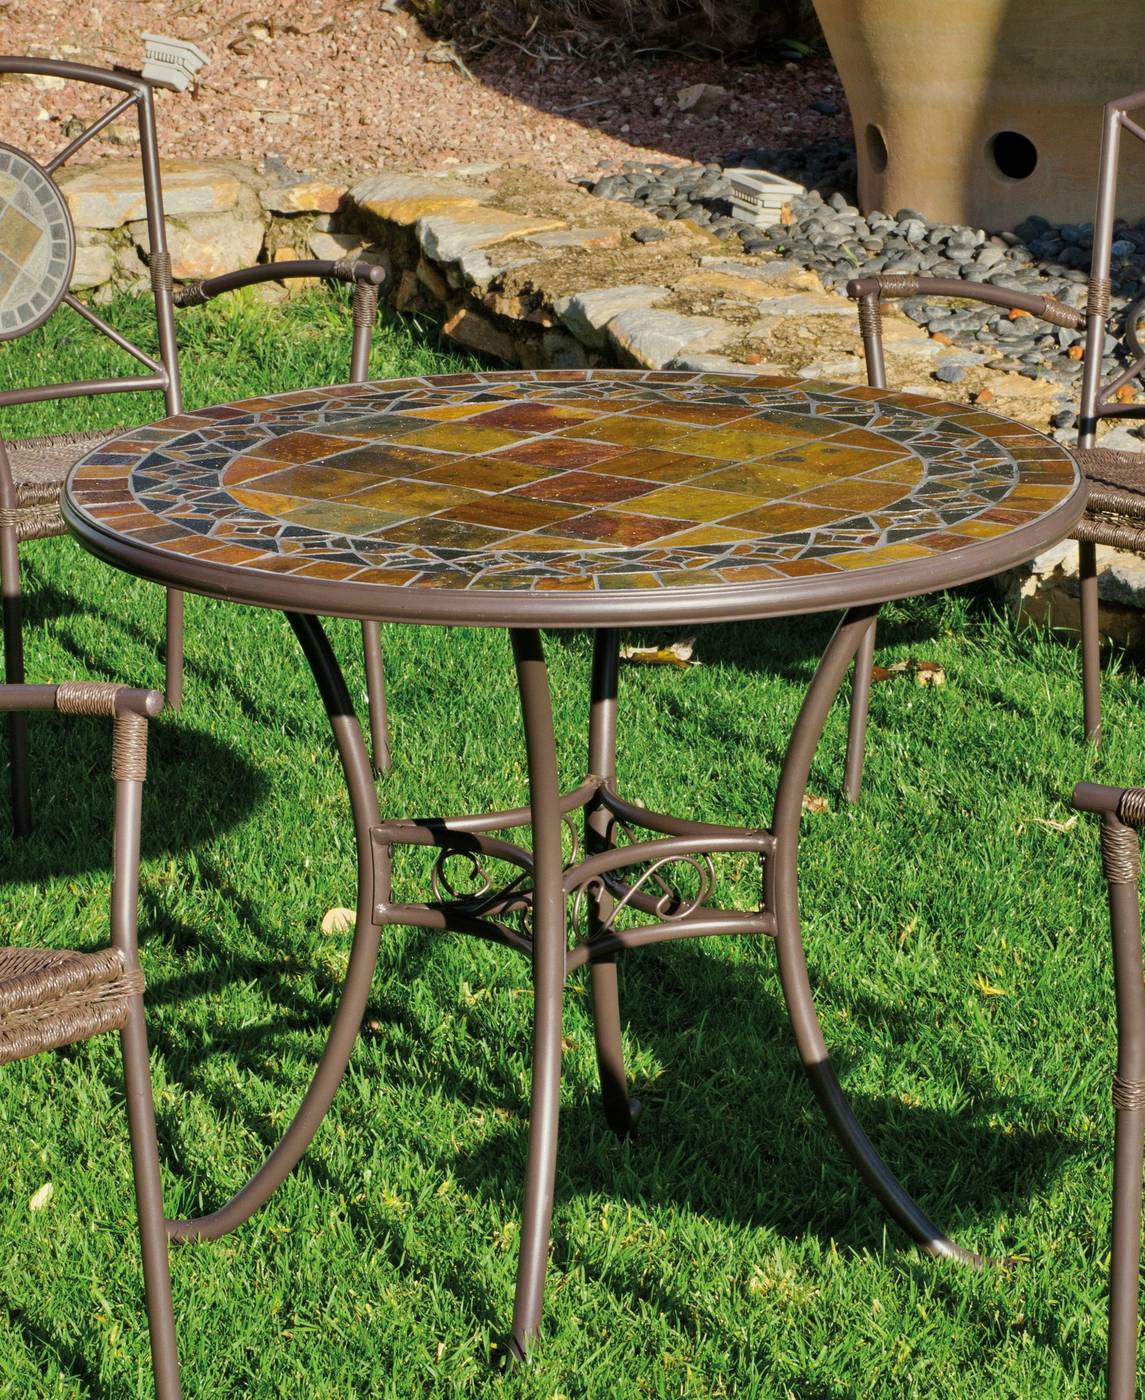 Set Mosaico Luxe Cancun-Sotomar - Conjunto lujoso de forja: mesa con panel mosaico de 90 cm de piedra + 4 sillones de forja apilables